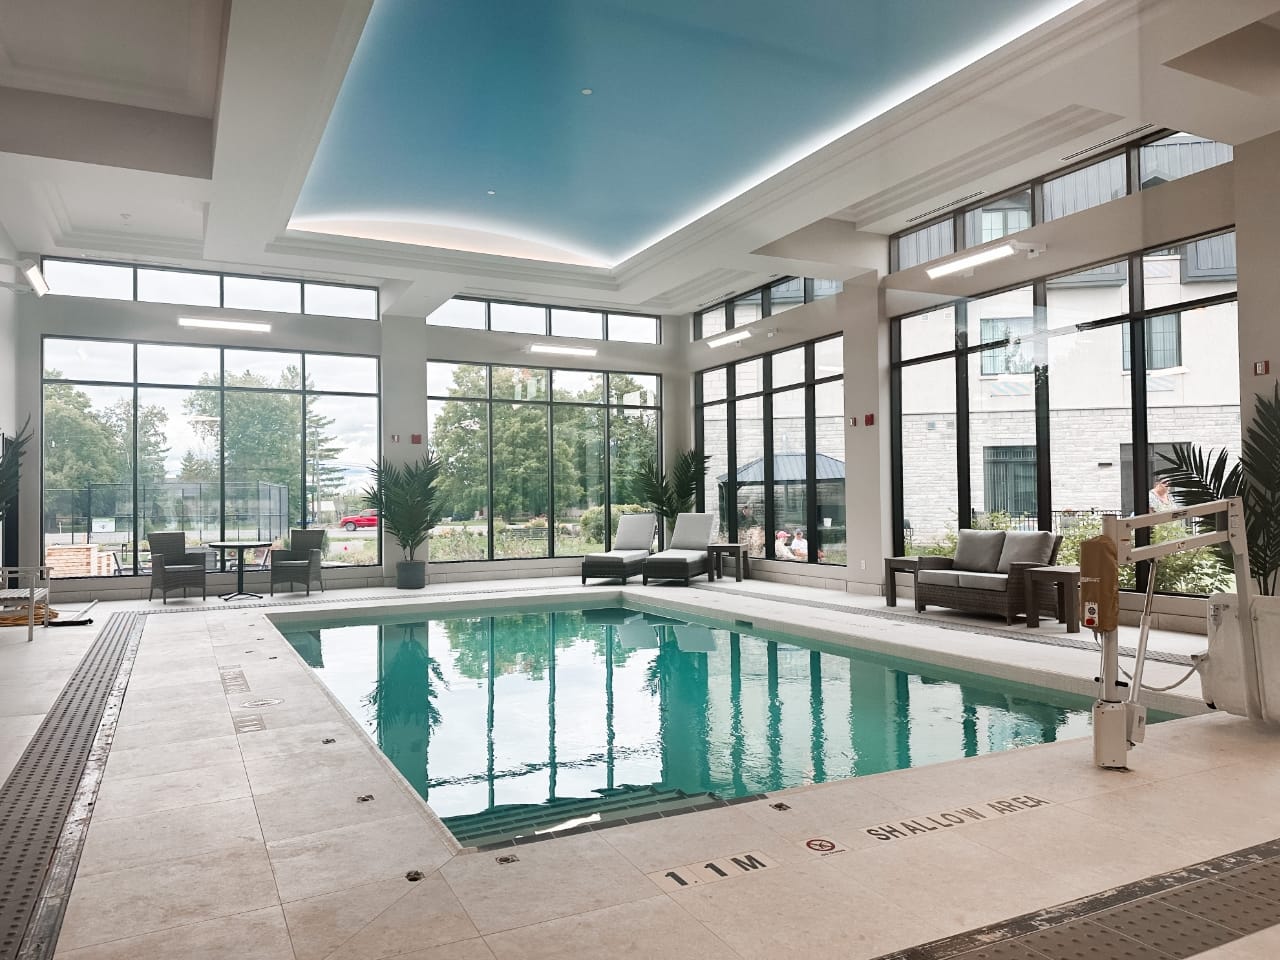 Indoor saltwater pool at Lanark Lifestyles Luxury Senior Apartments